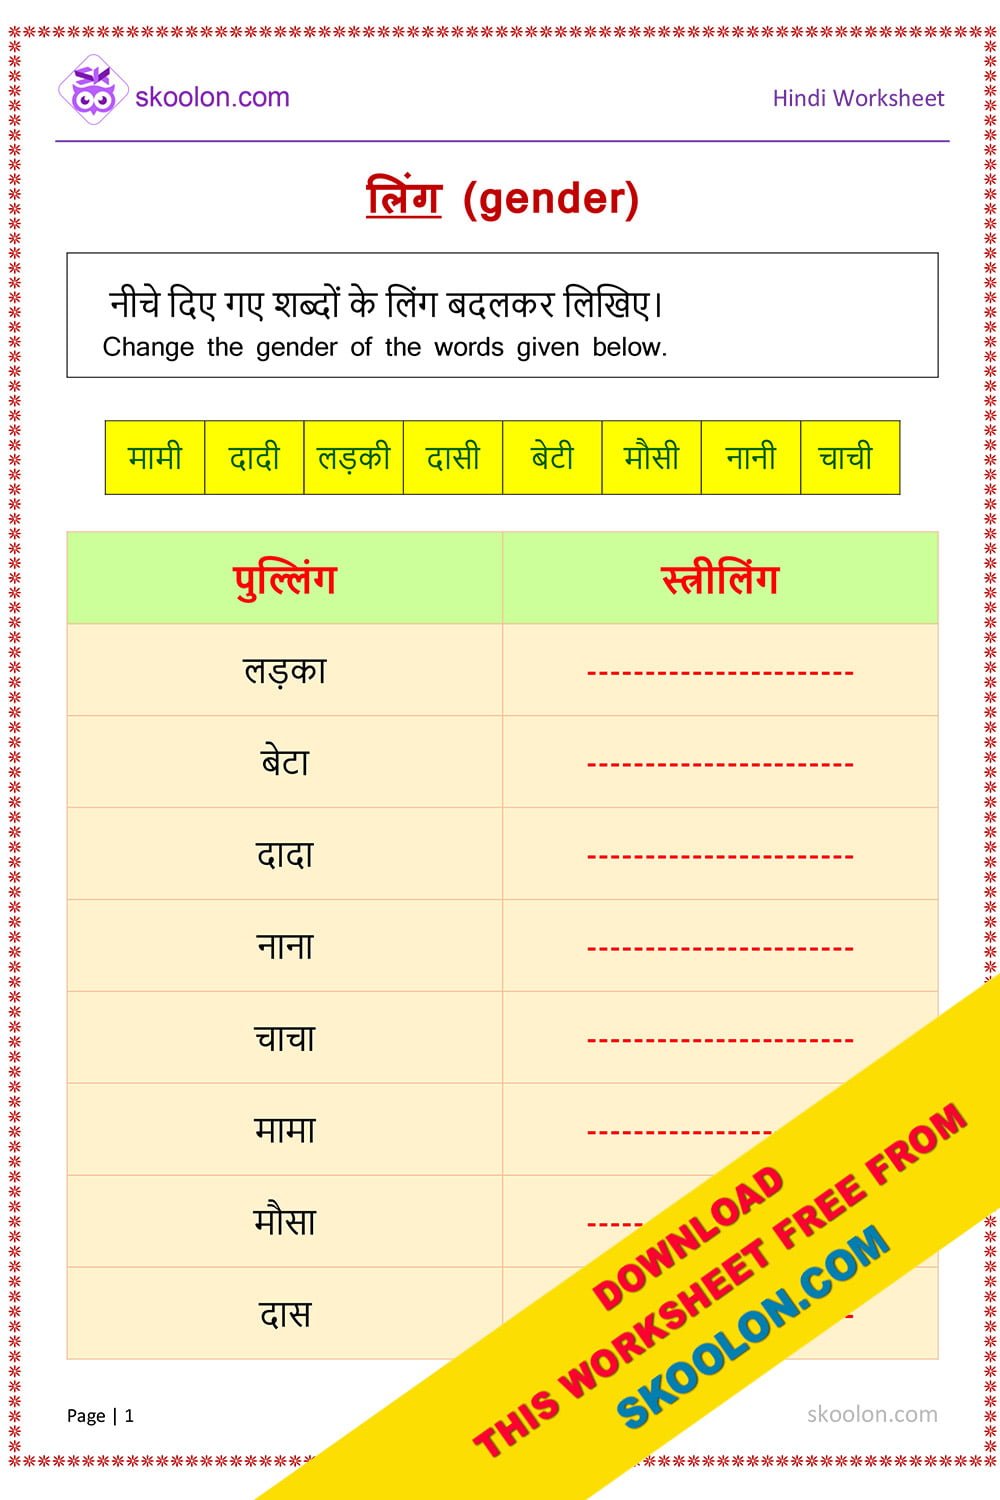 hindi-grammar-ling-worksheet-5-skoolon